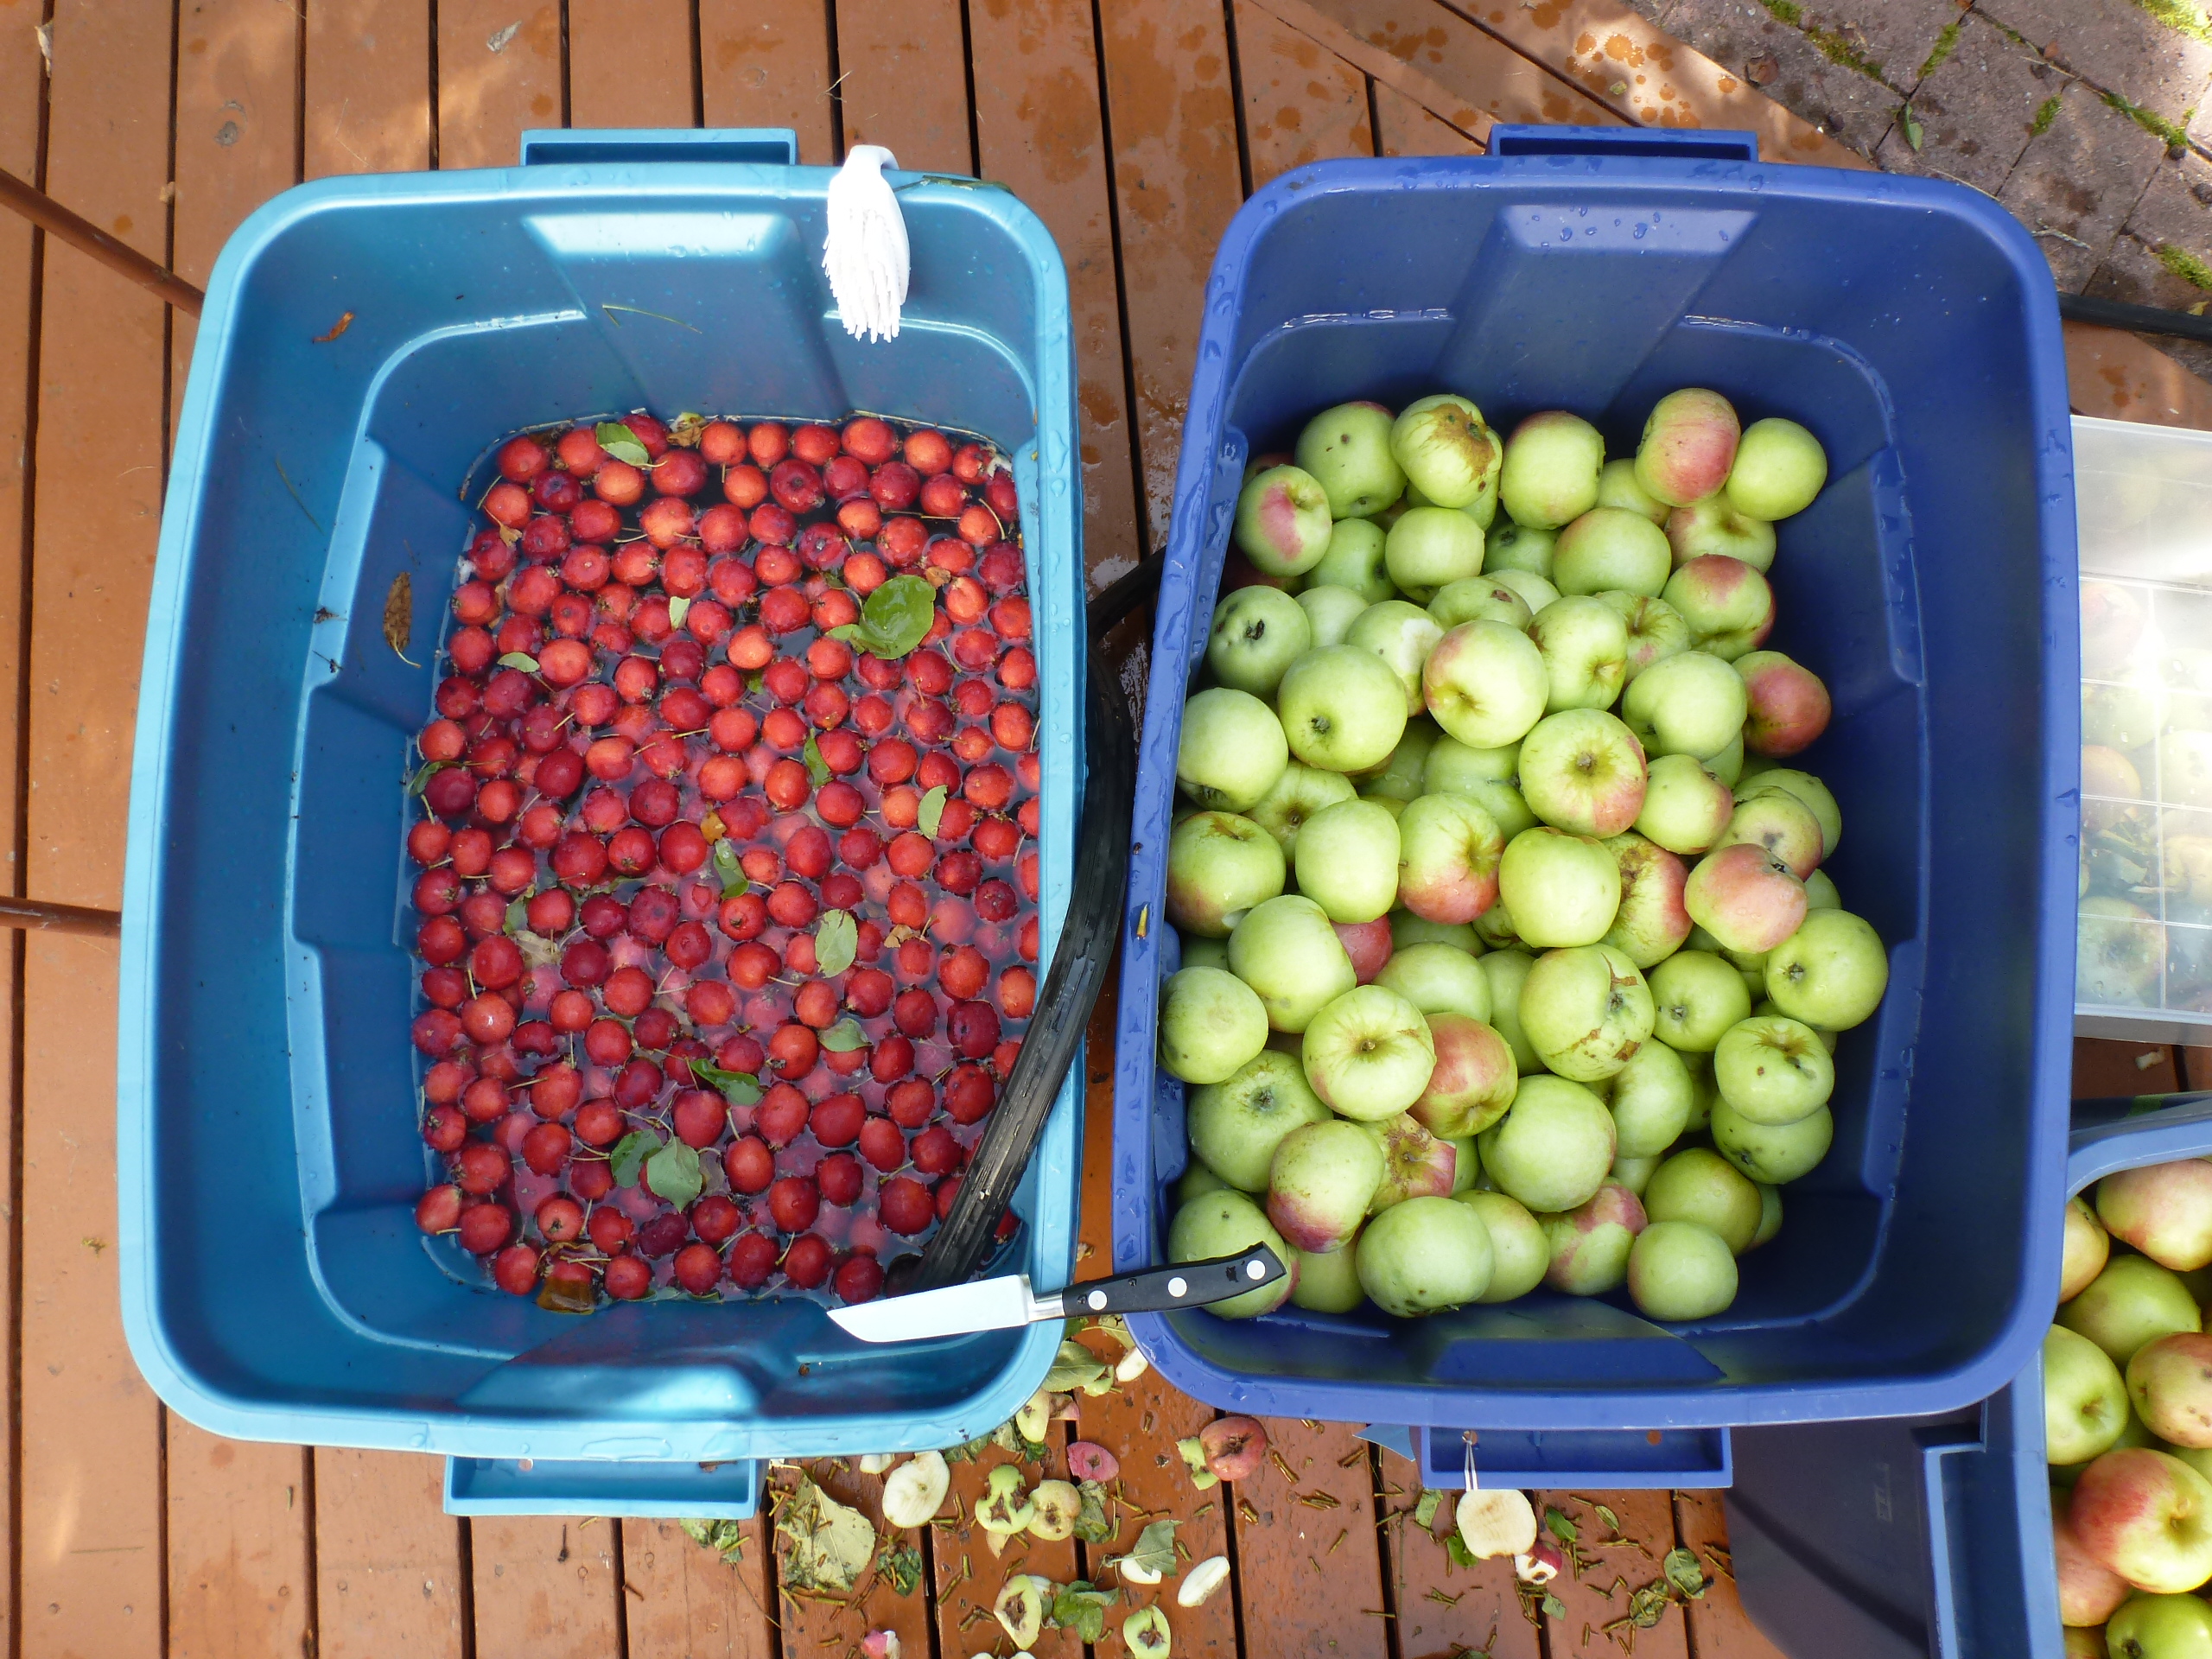 Left: Dolgo crabapples, Right: Norkent apples (I think...)